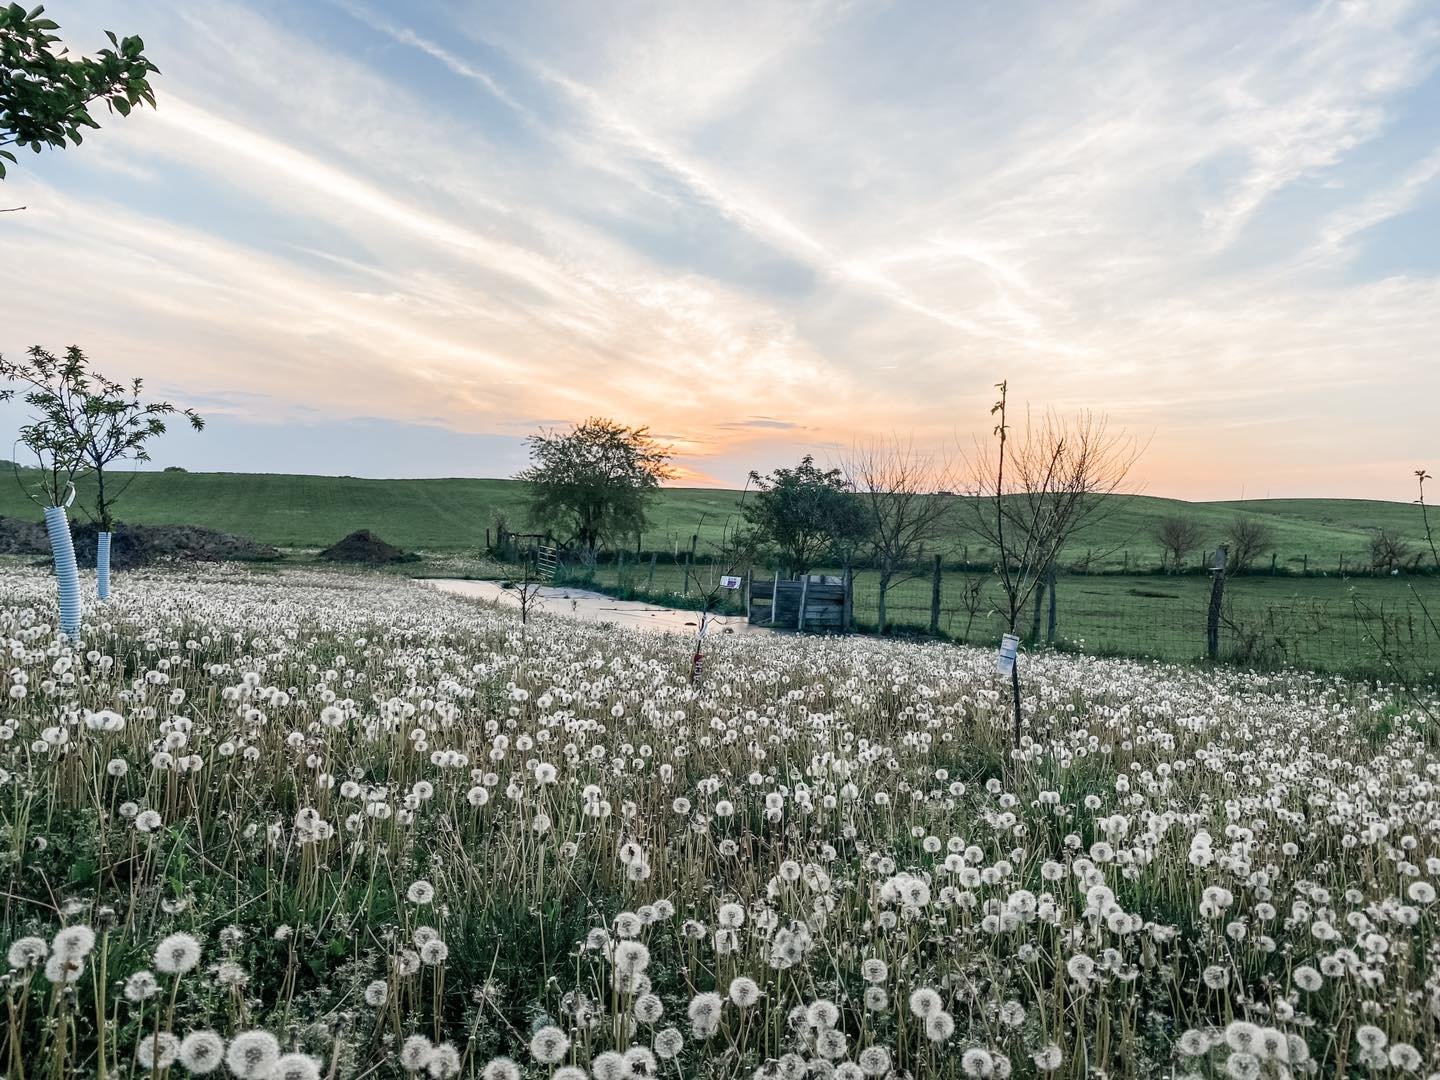 Even a field of dandelions is beautiful at sunset 

#flowerfarm